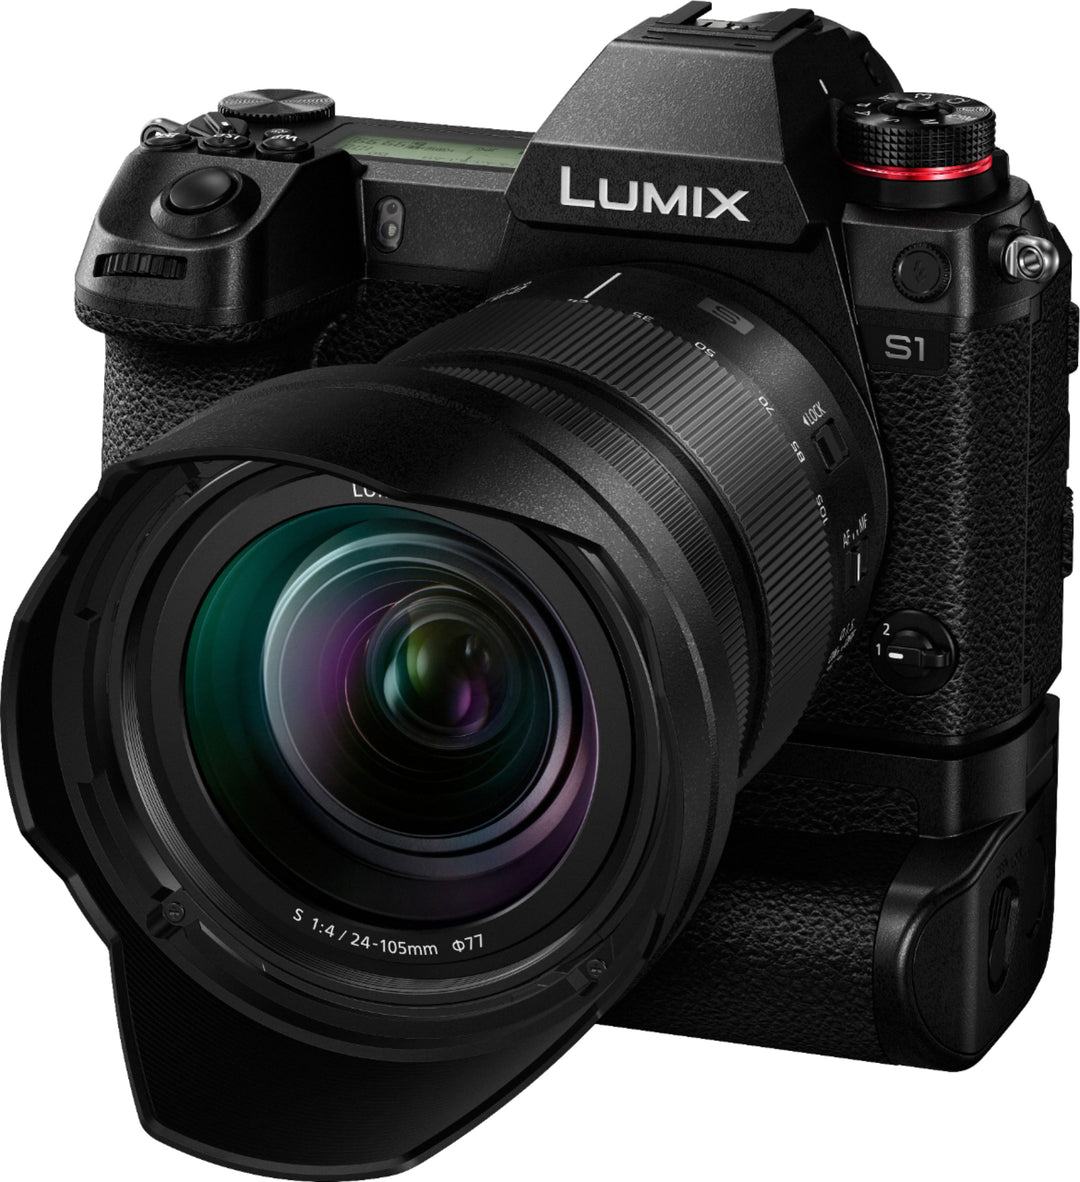 Panasonic - LUMIX S1 Mirrorless Full-Frame 4K Photo Digital Camera with 24-105mm F4 L-Mount Lens - Black_1